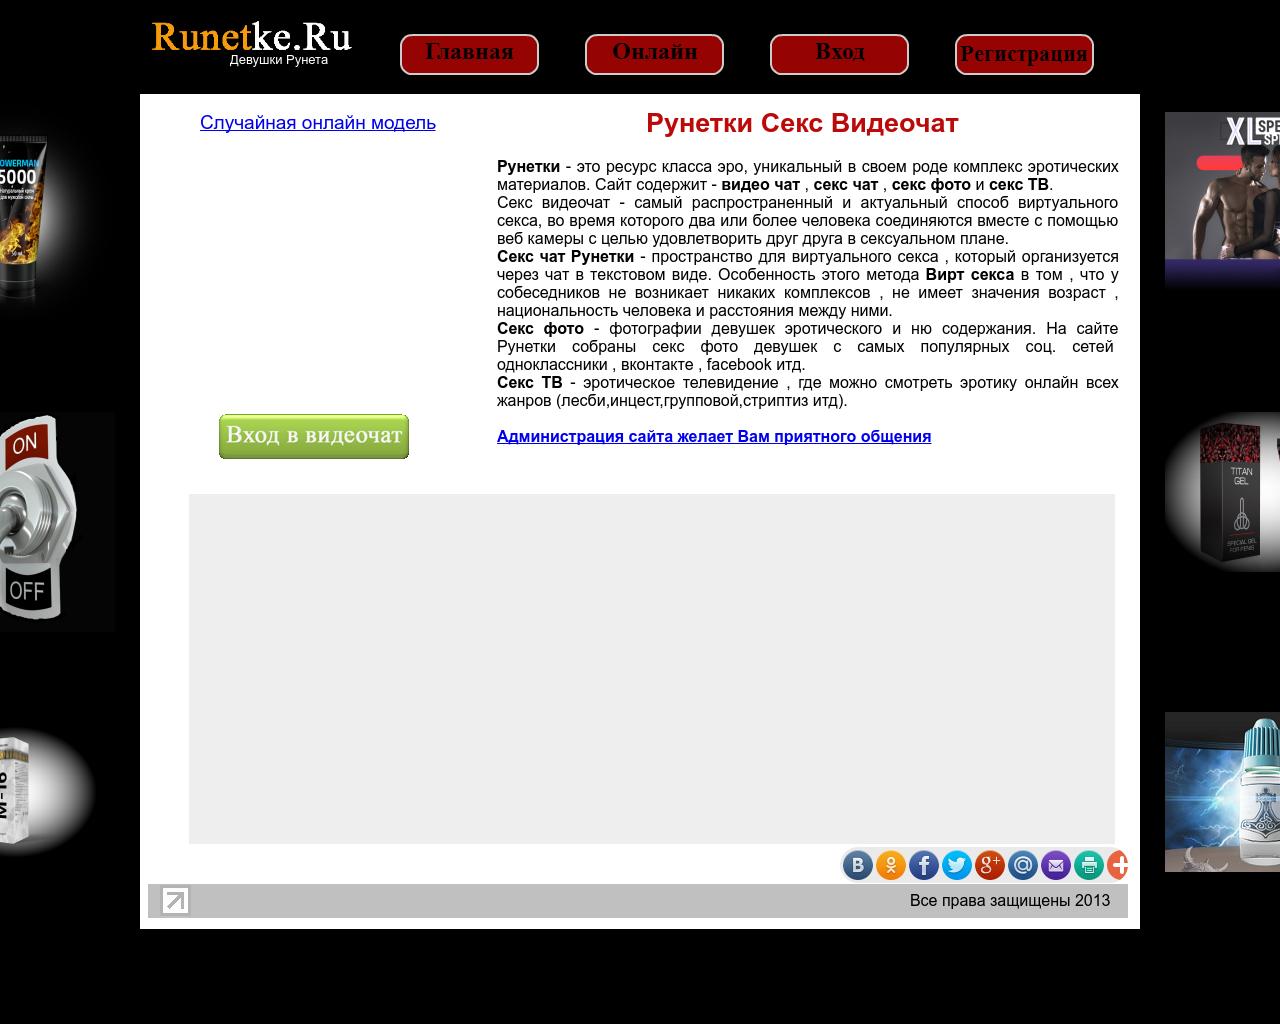 Изображение сайта runetke.ru в разрешении 1280x1024